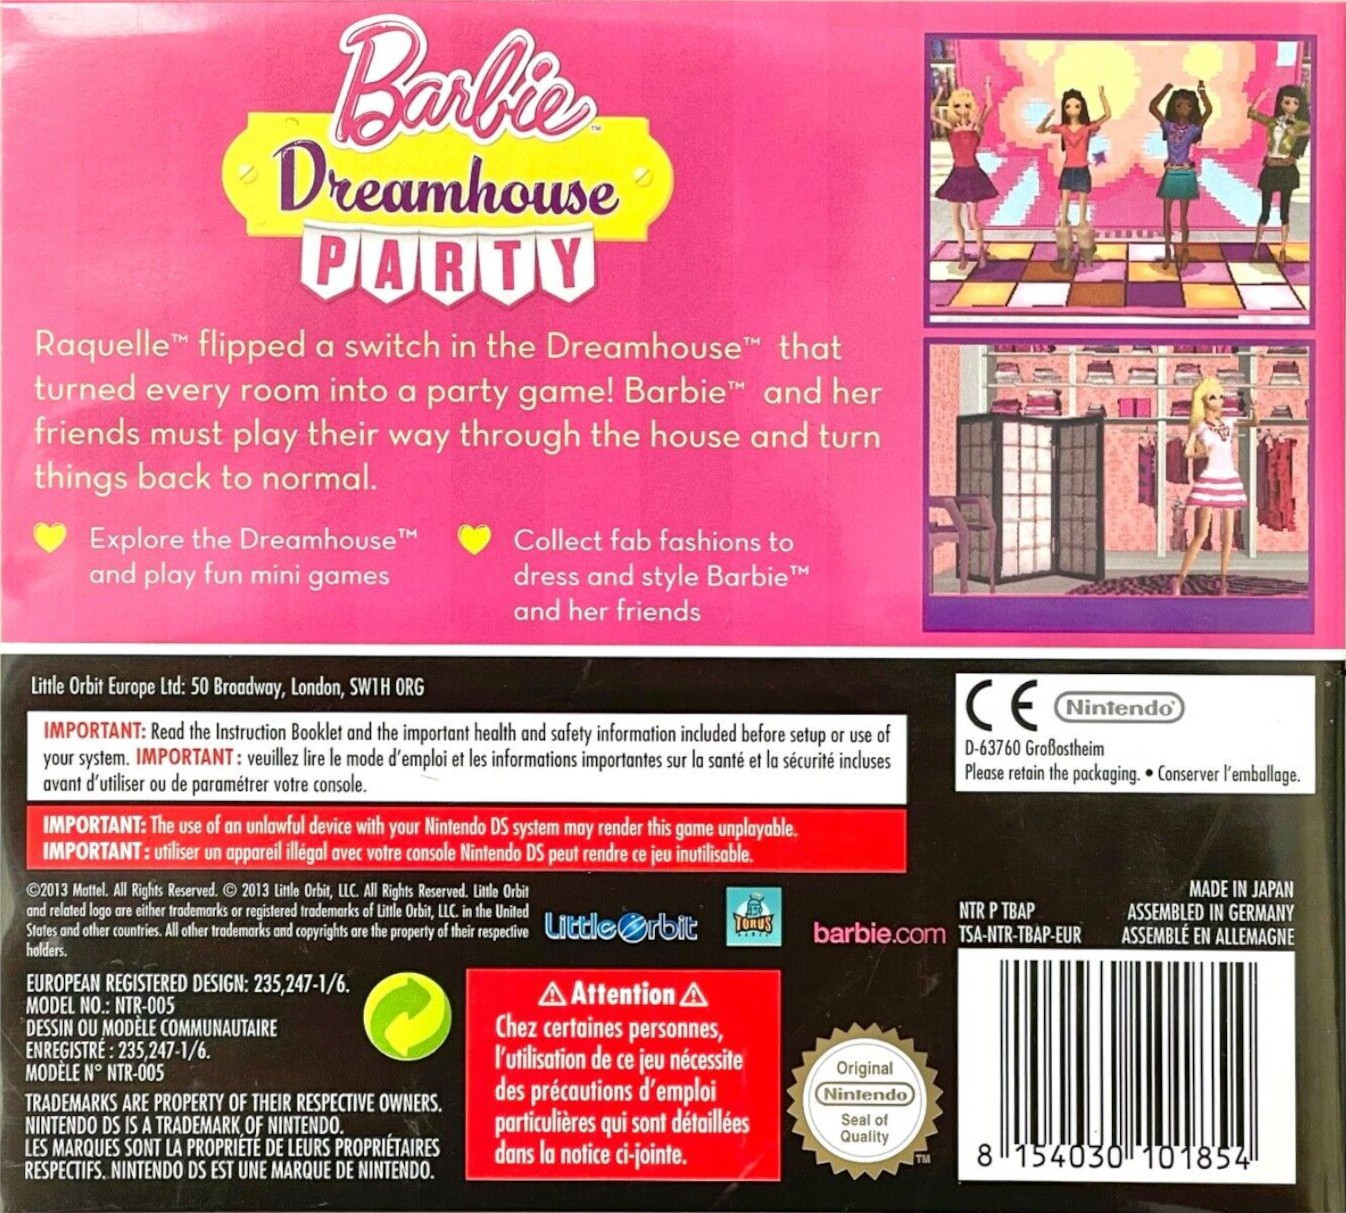 Barbie Dreamhouse Party Images - LaunchBox Games Database